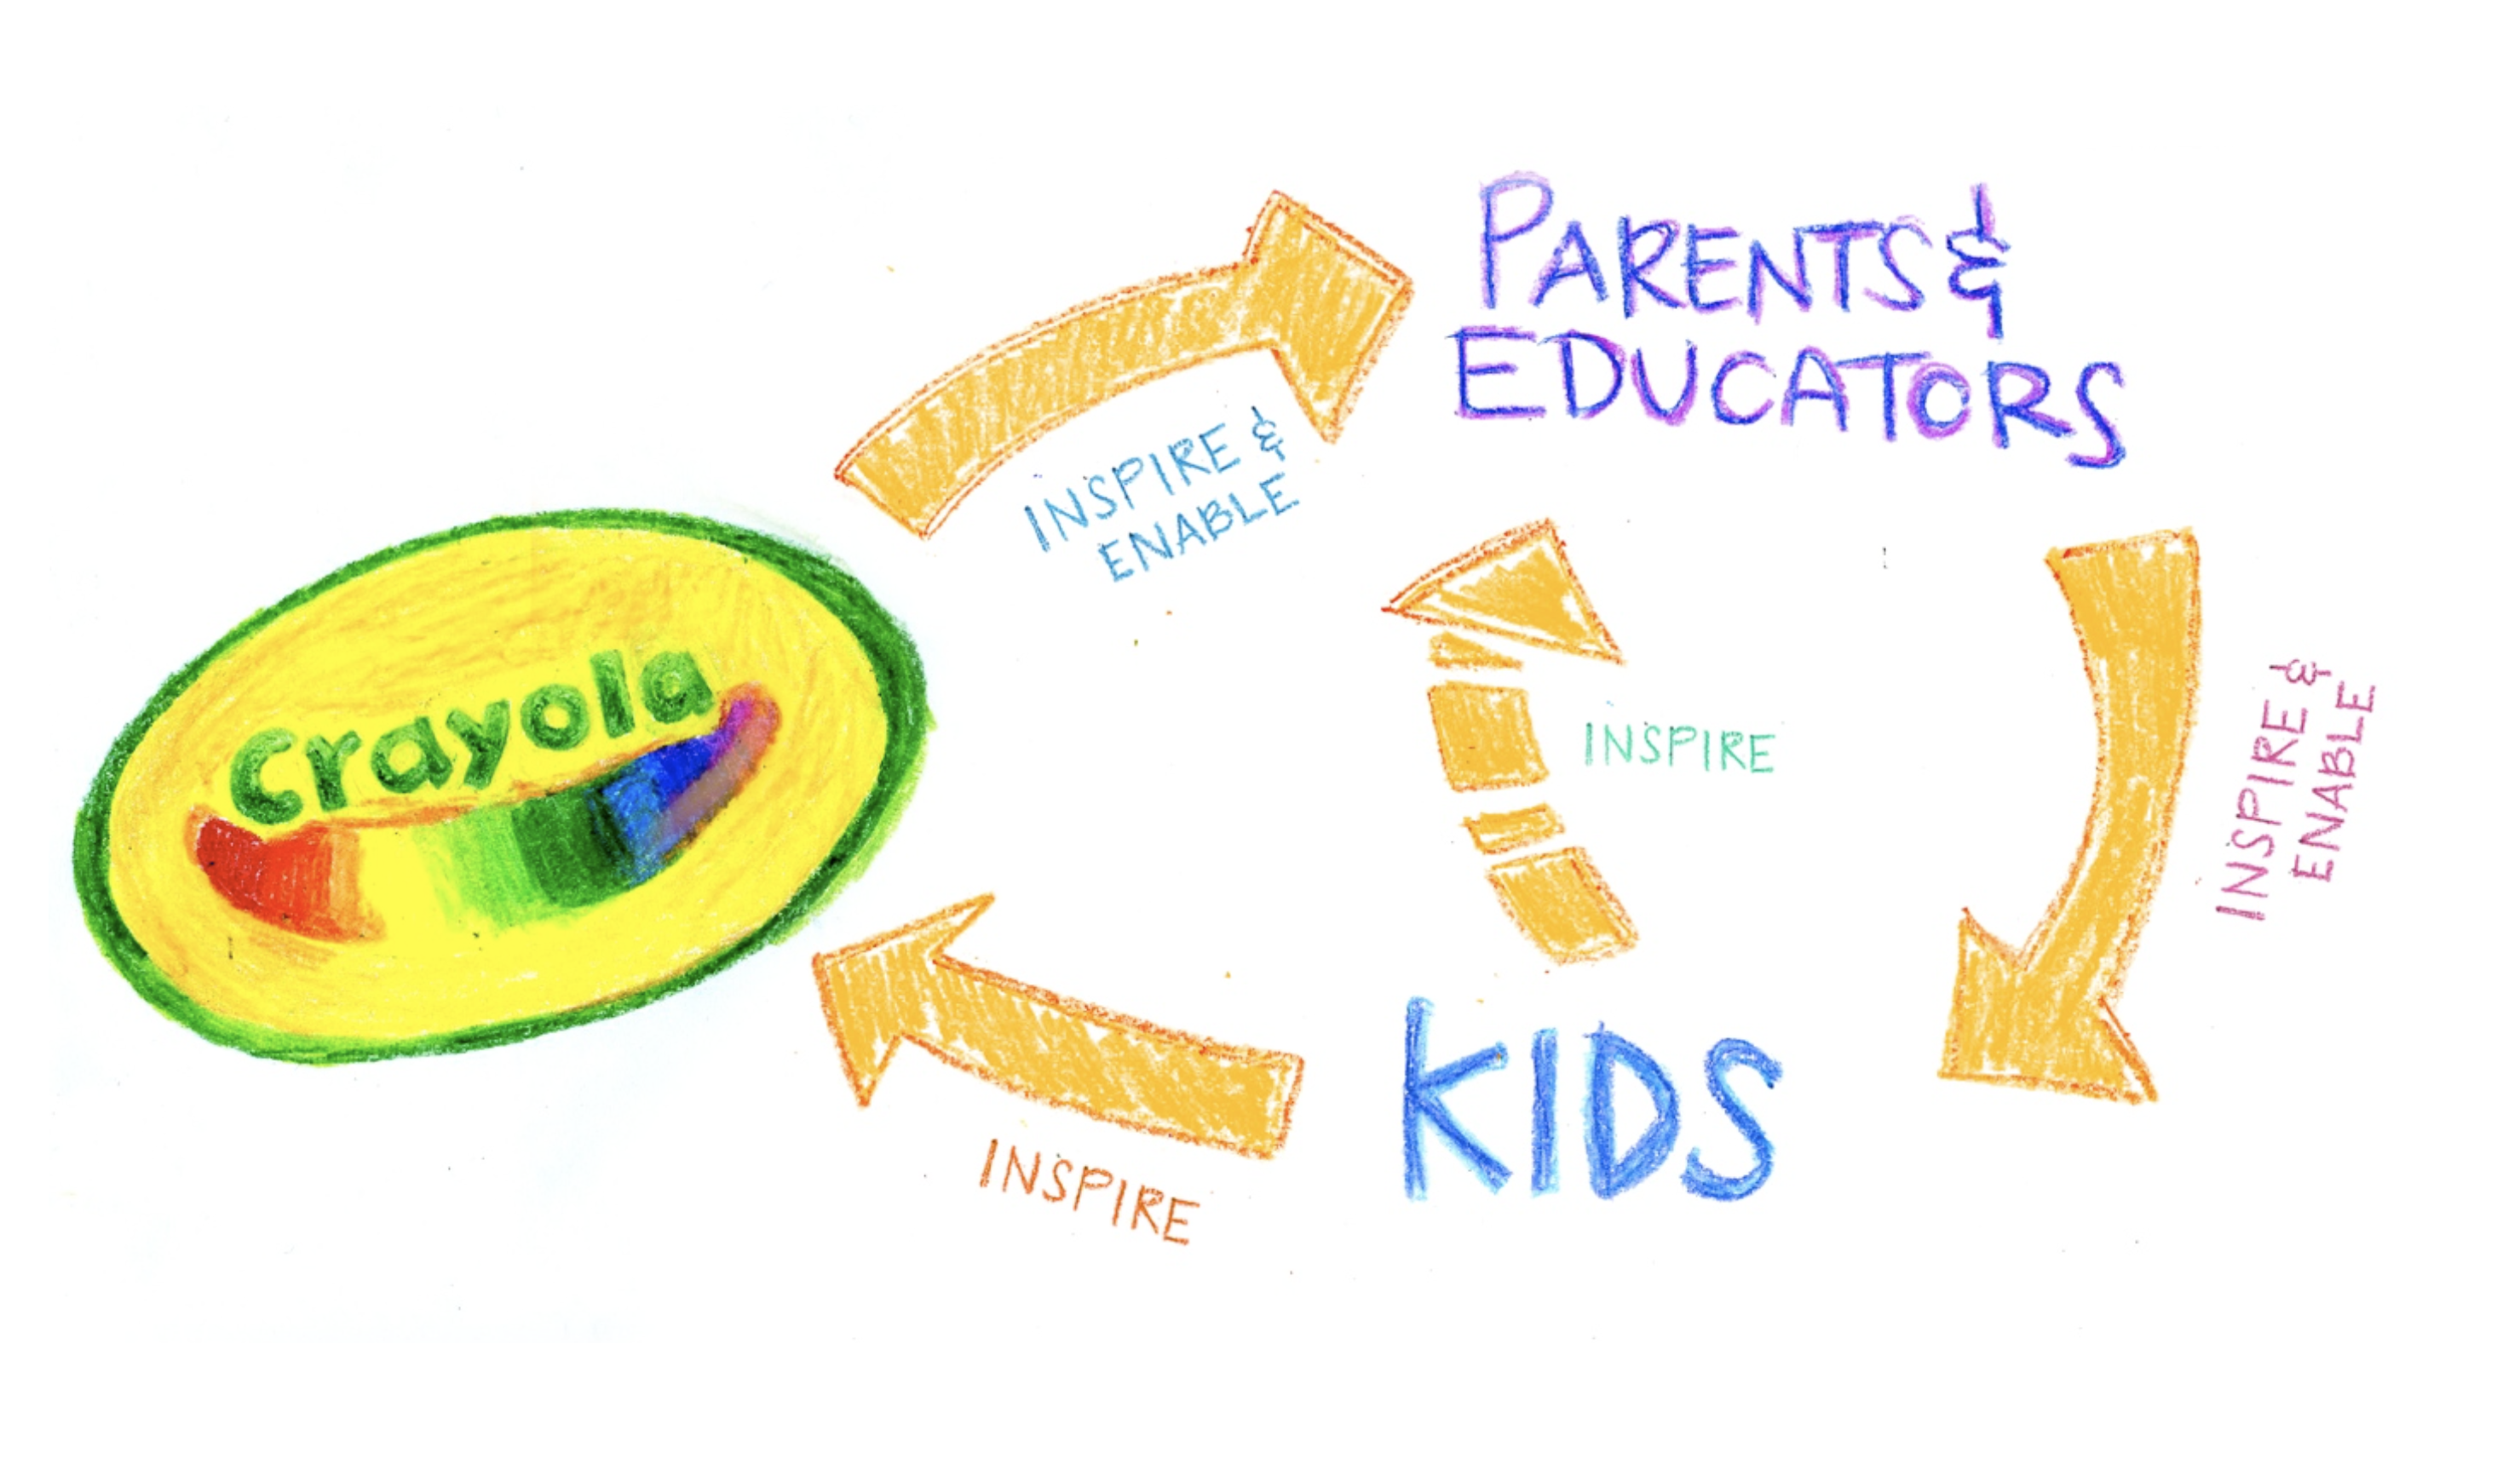 A flywheel: Crayola inspires and enables parents & educators, who inspire and enable kids, who inspire Crayola, who continues to inspire and enable parent & educators.